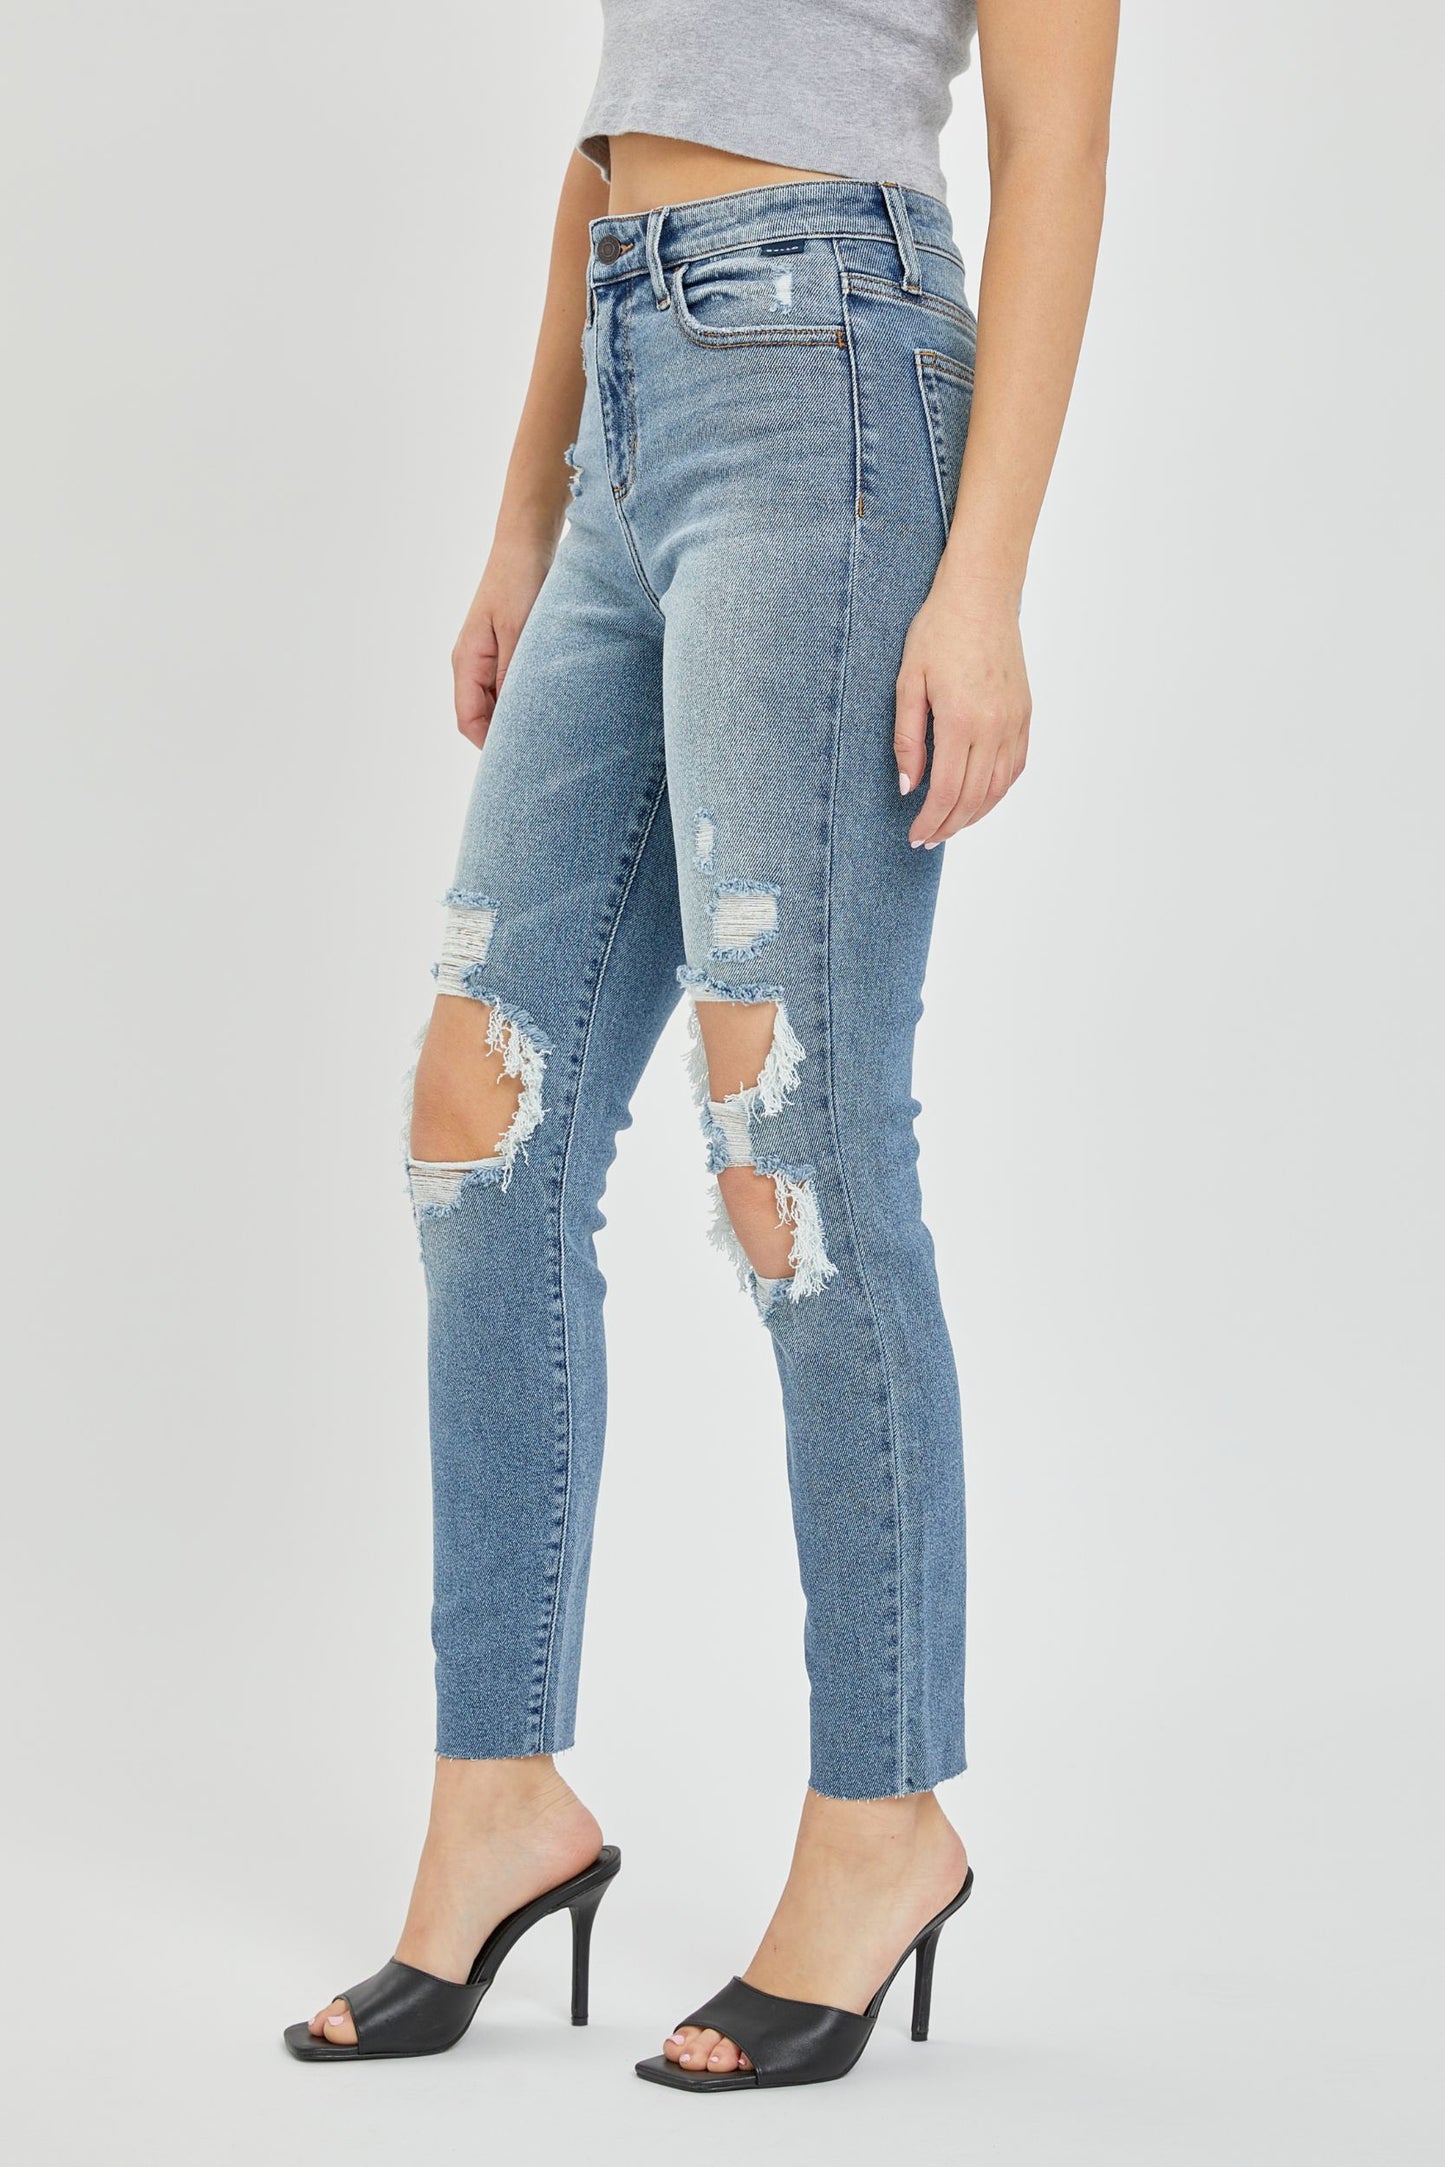 Keyla Jeans